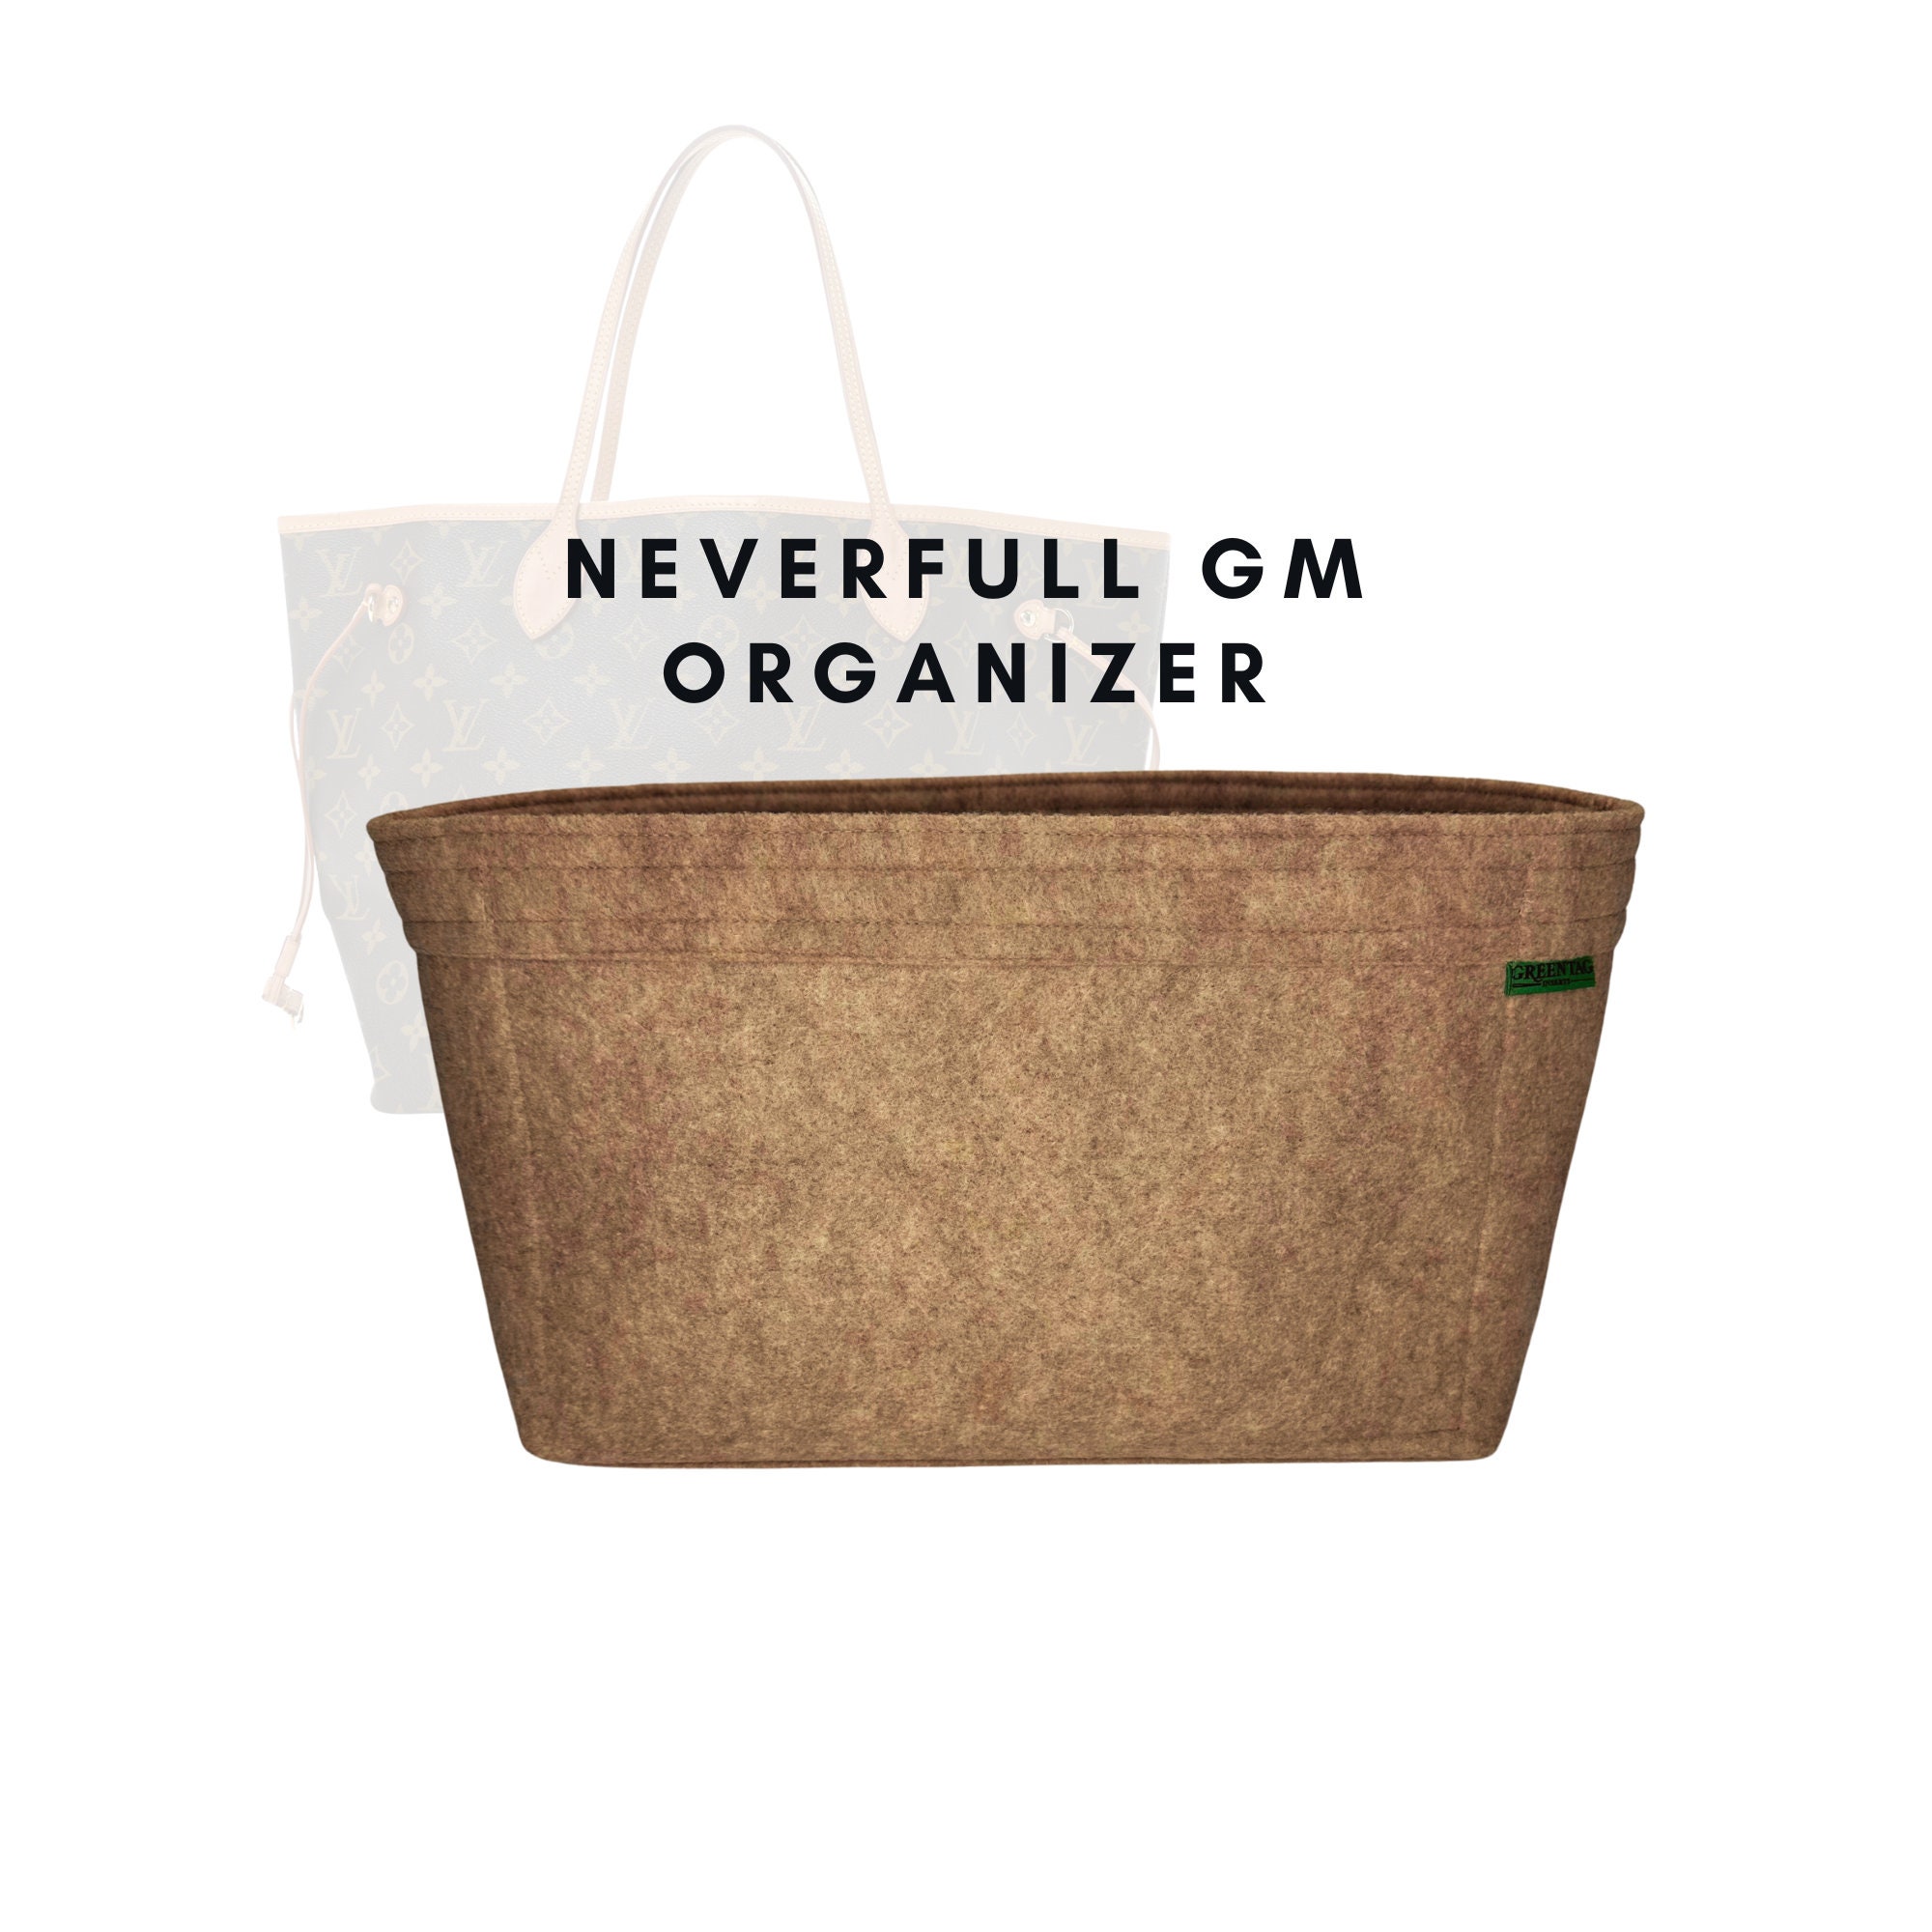 Neverfull GM Organizer] Felt Purse Insert, Bag in Bag, Customized Tot